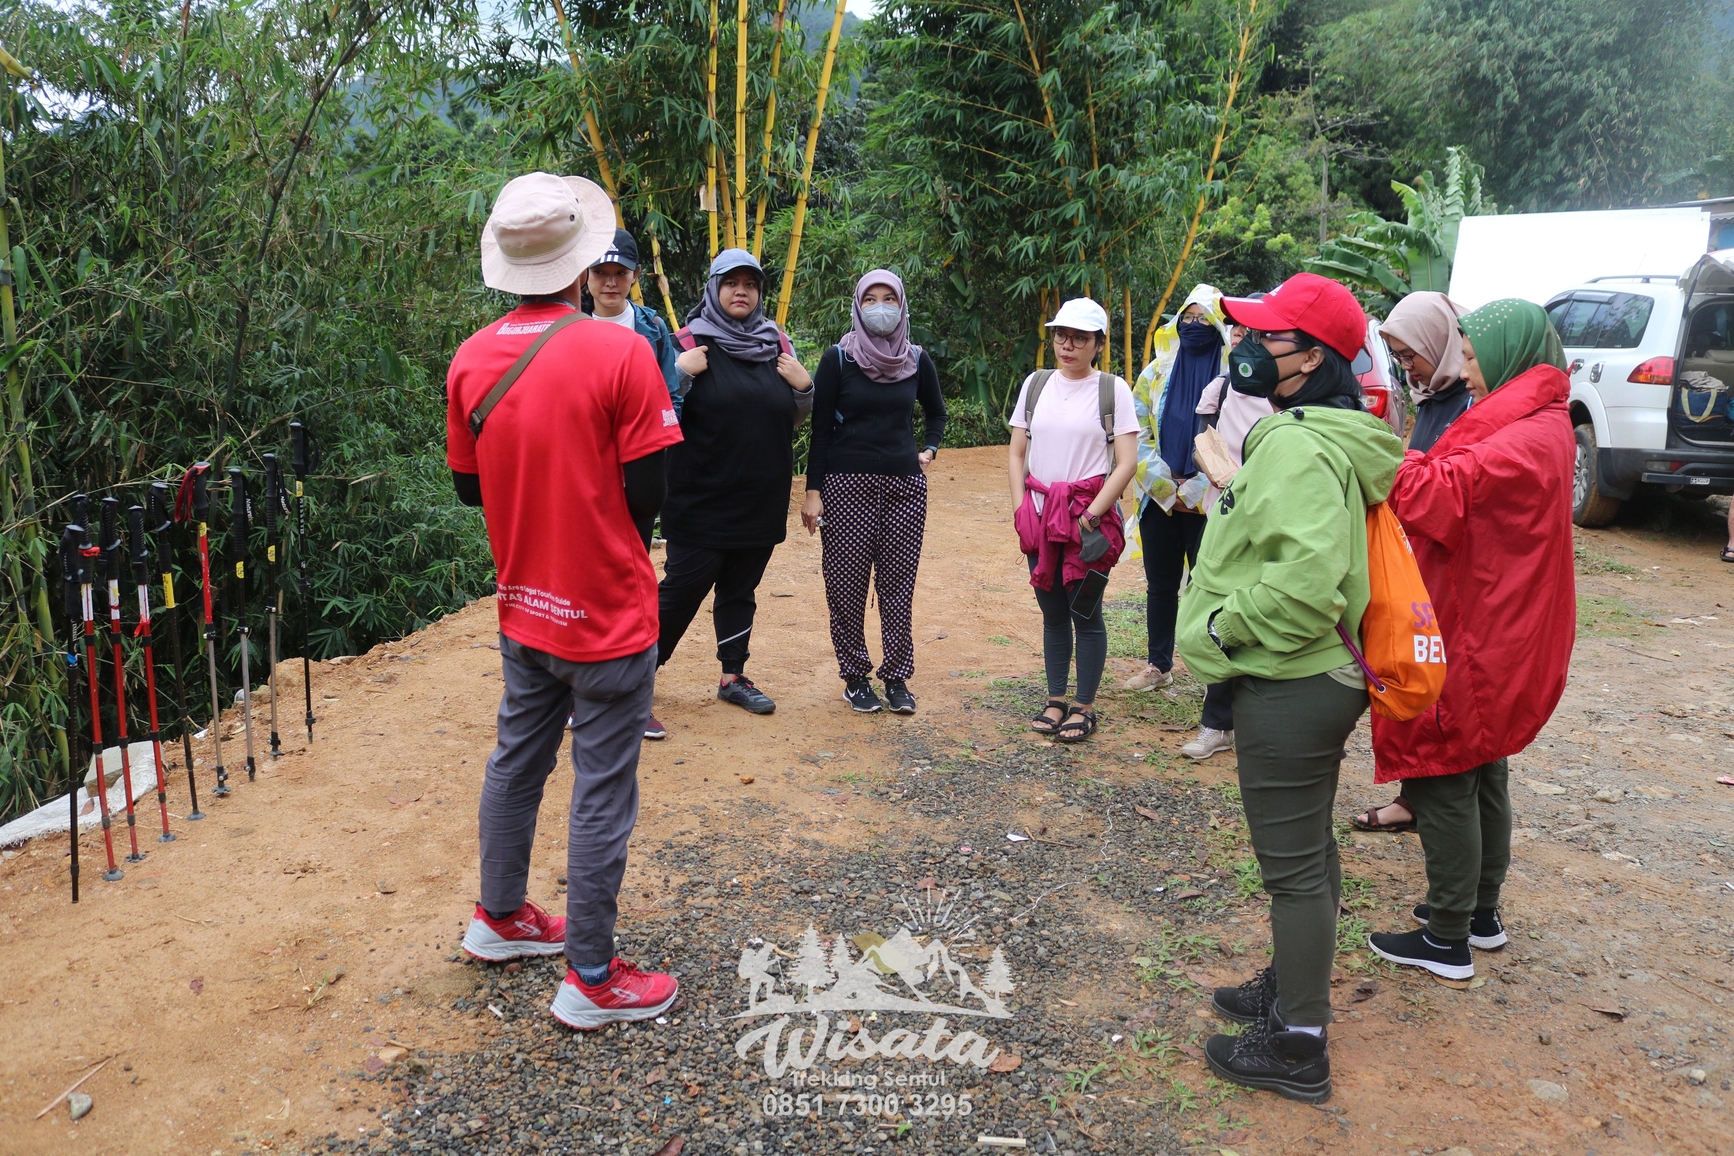 Liburan Sehat trekking Sentul Bogor Cuma 1 Jam dari Matraman, Jakarta